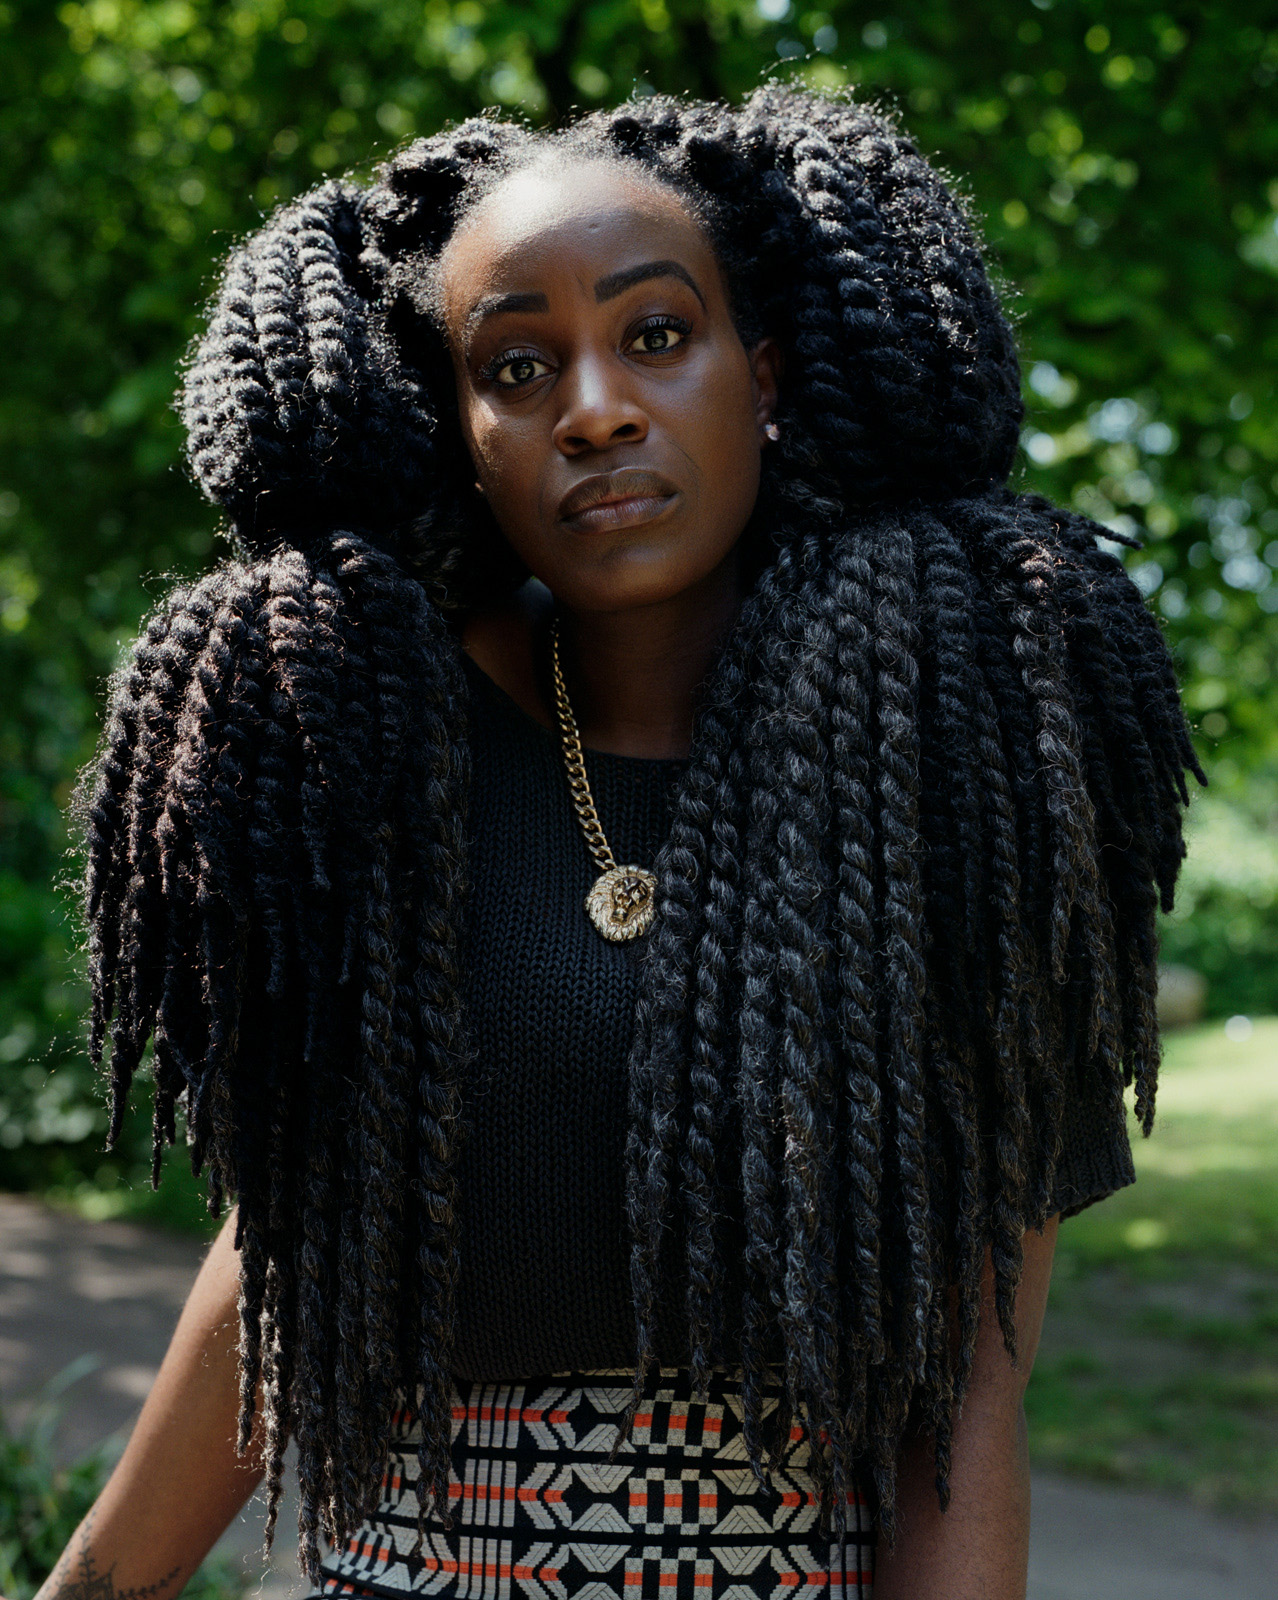 Ruby, Beautiful black woman with oversized jumbo braids, street photography.